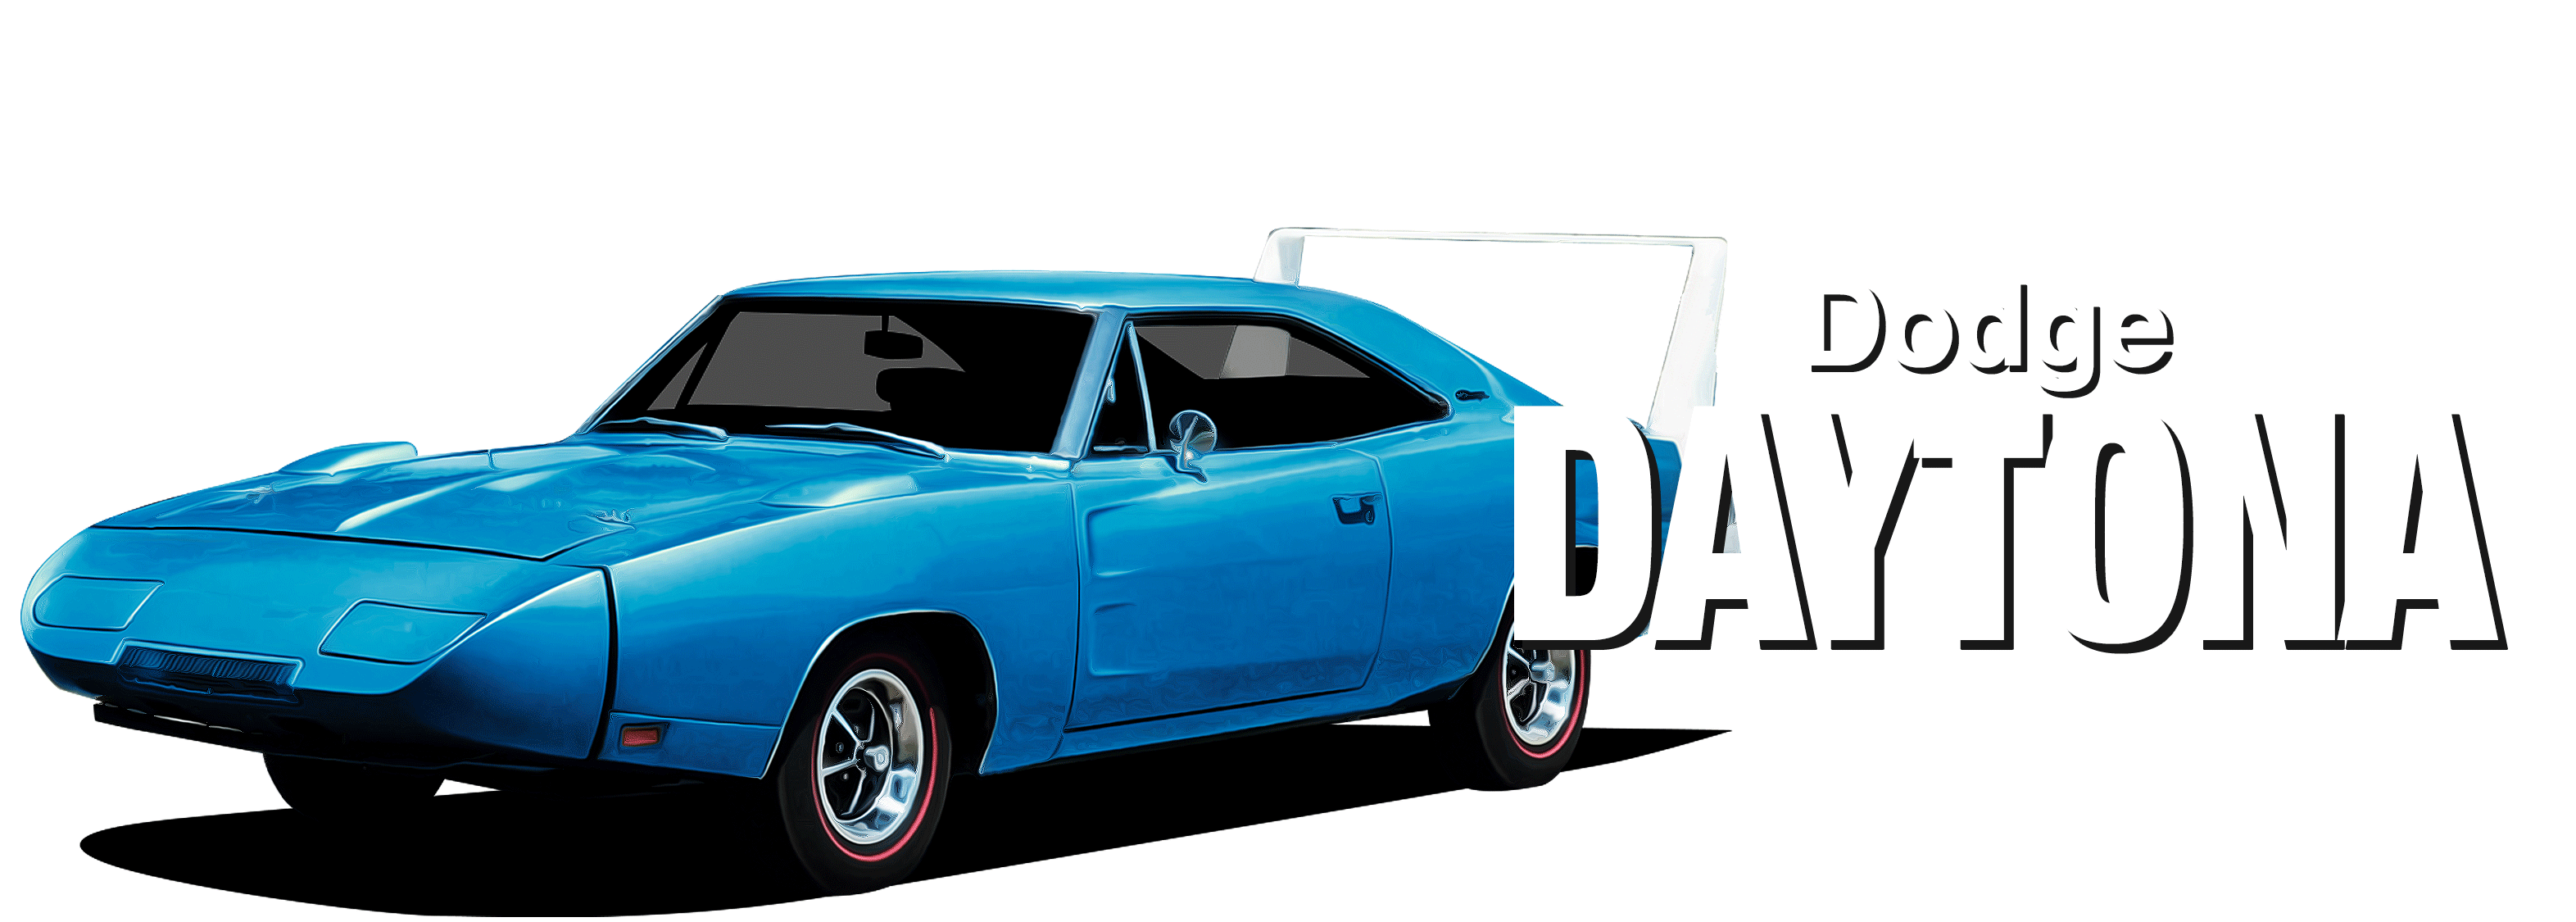 Dodge-Daytona-vehicle-desktop_v2-2023-1